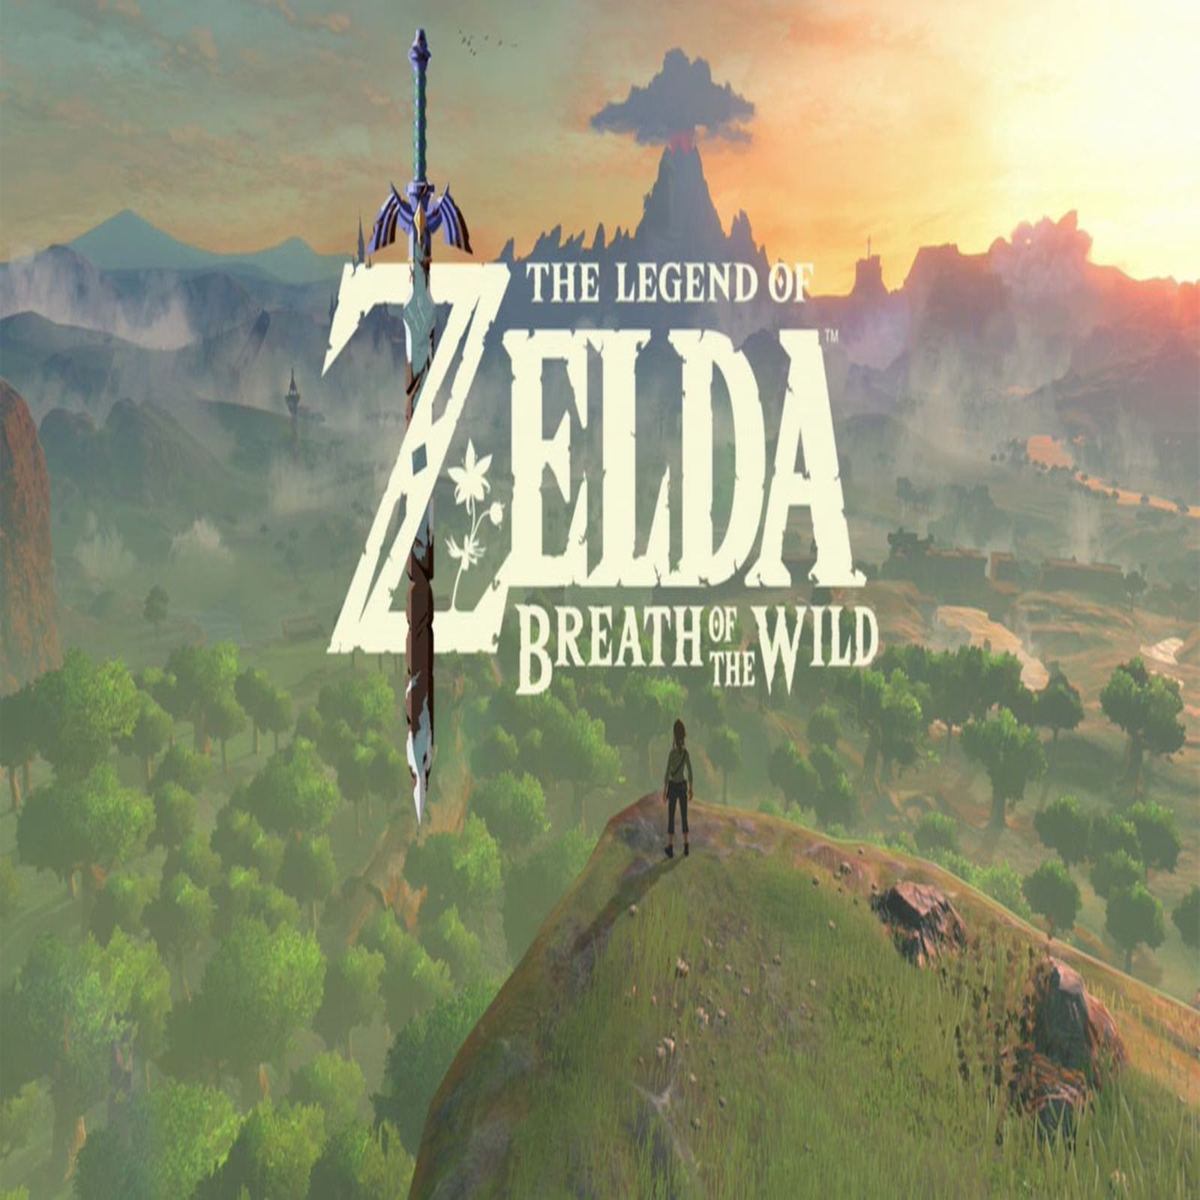 Nintendo Insider Shares The Legend of Zelda: Breath of the Wild 2